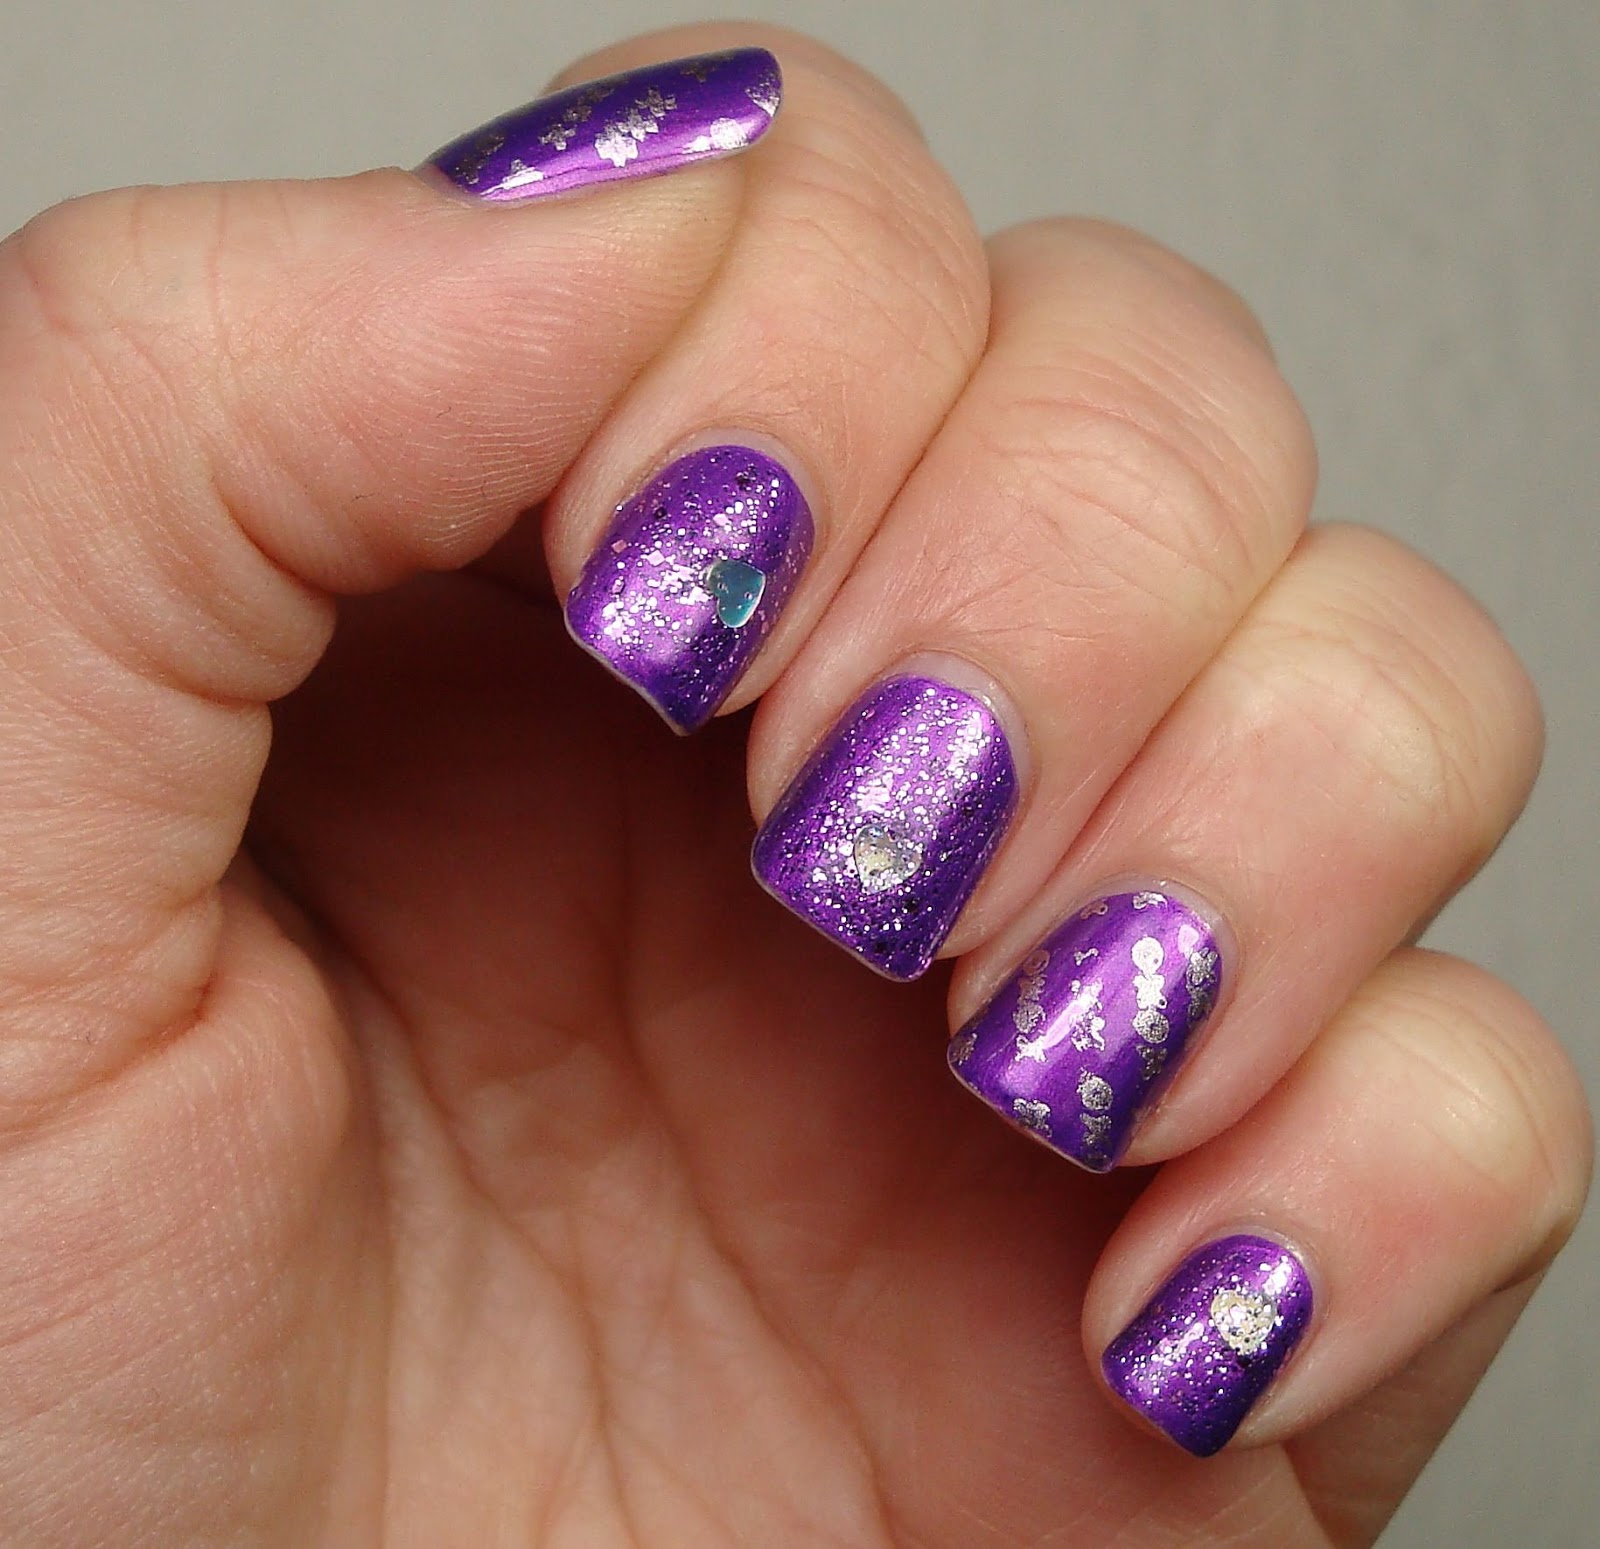 Amazing Short Purple Nails!